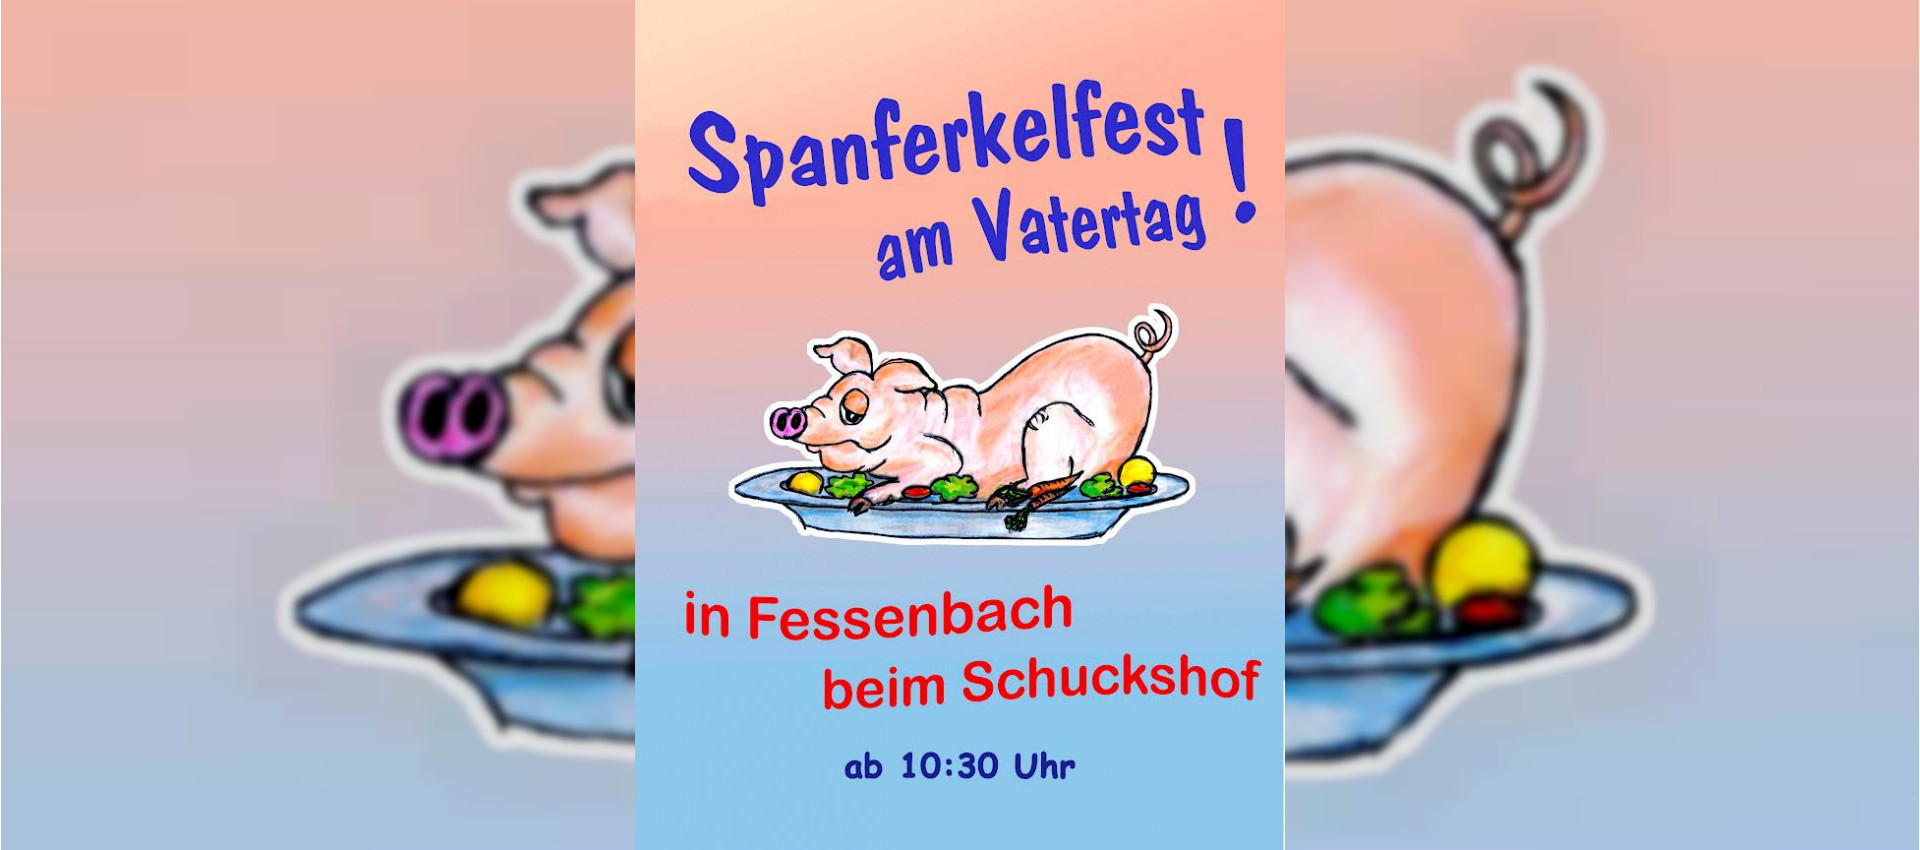 Spanferkelfest am Vatertag in Fessenbach